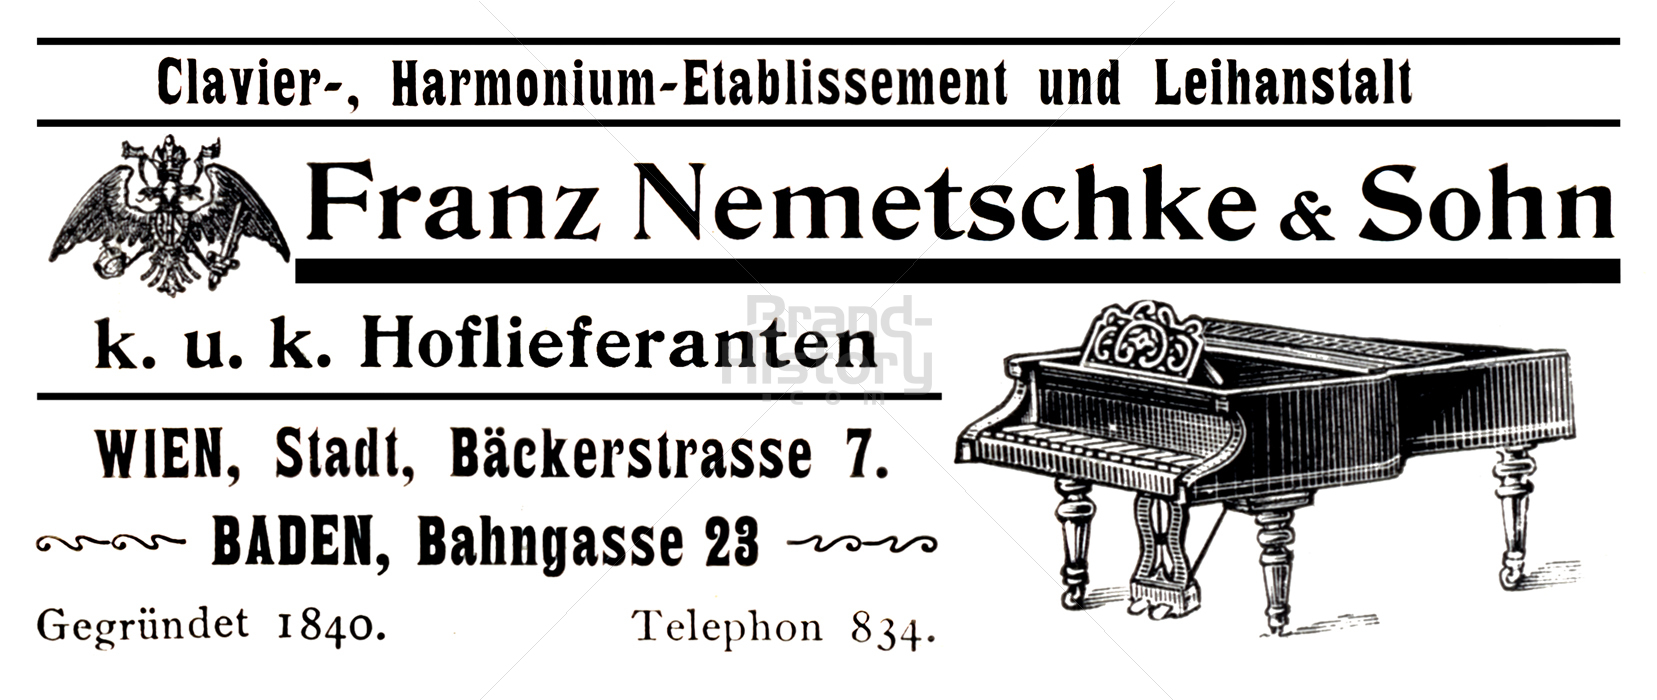 Franz Nemetschke & Sohn